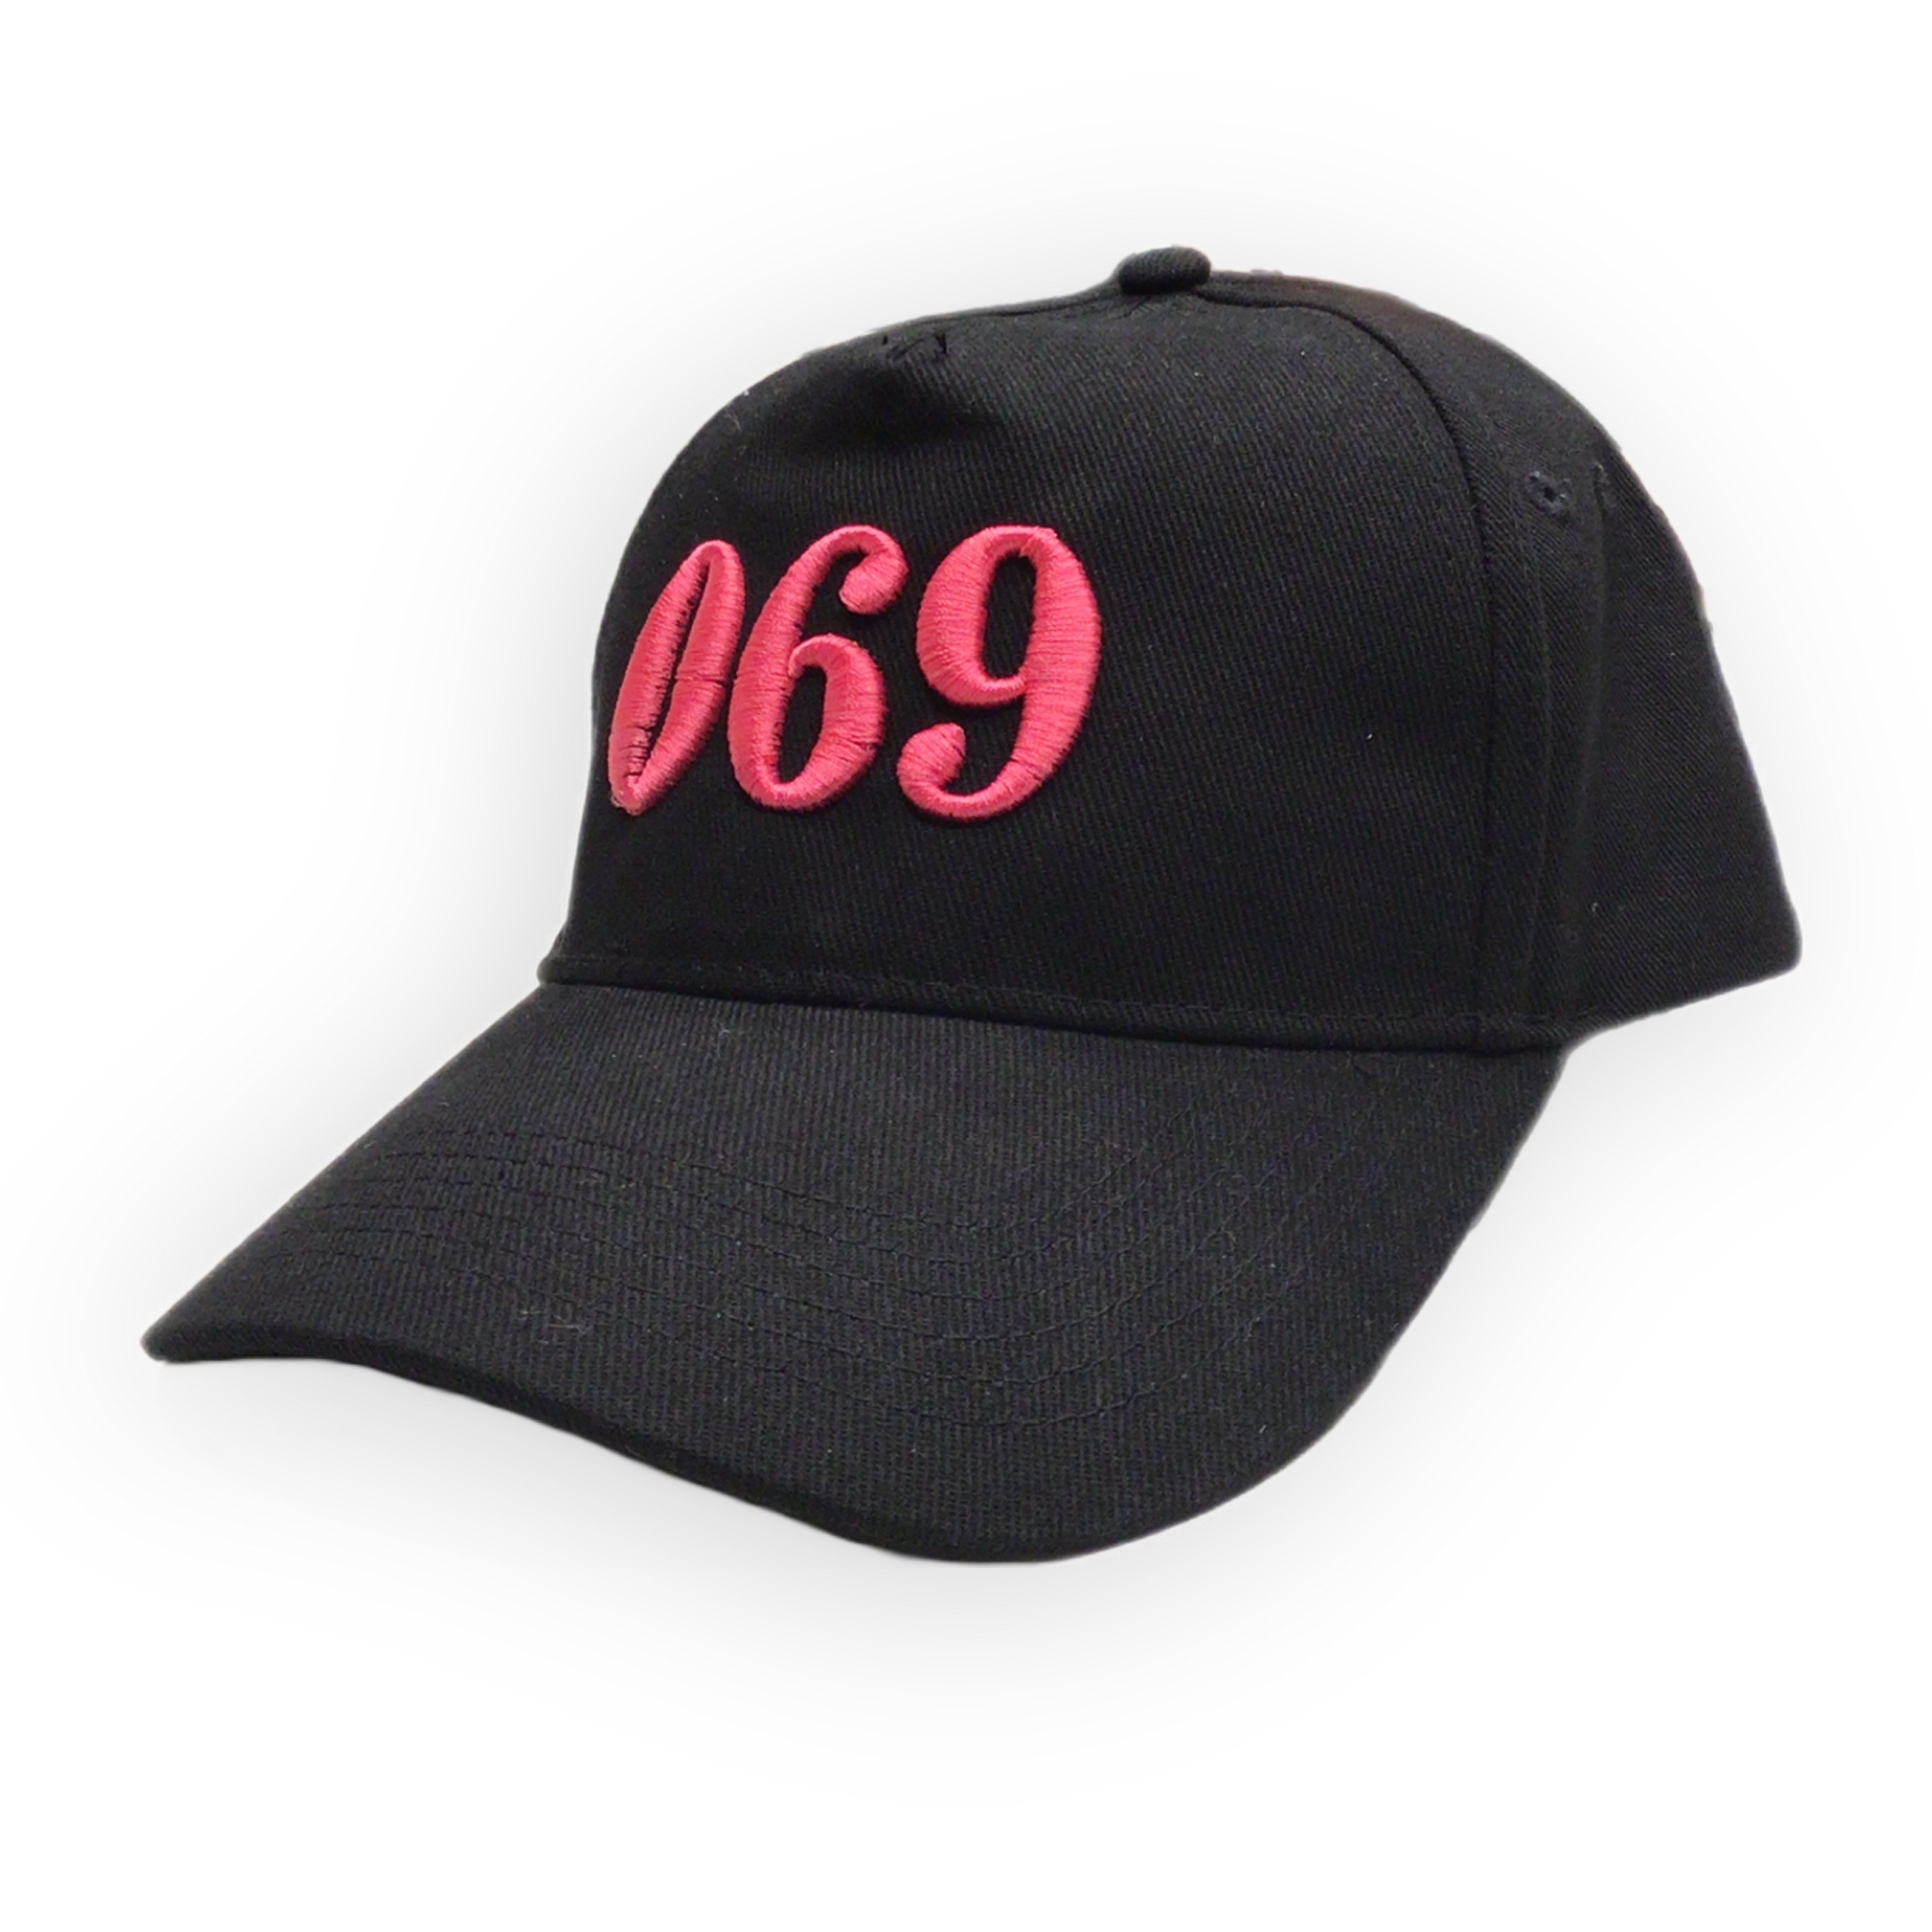 Kappe "069" schwarz-pink